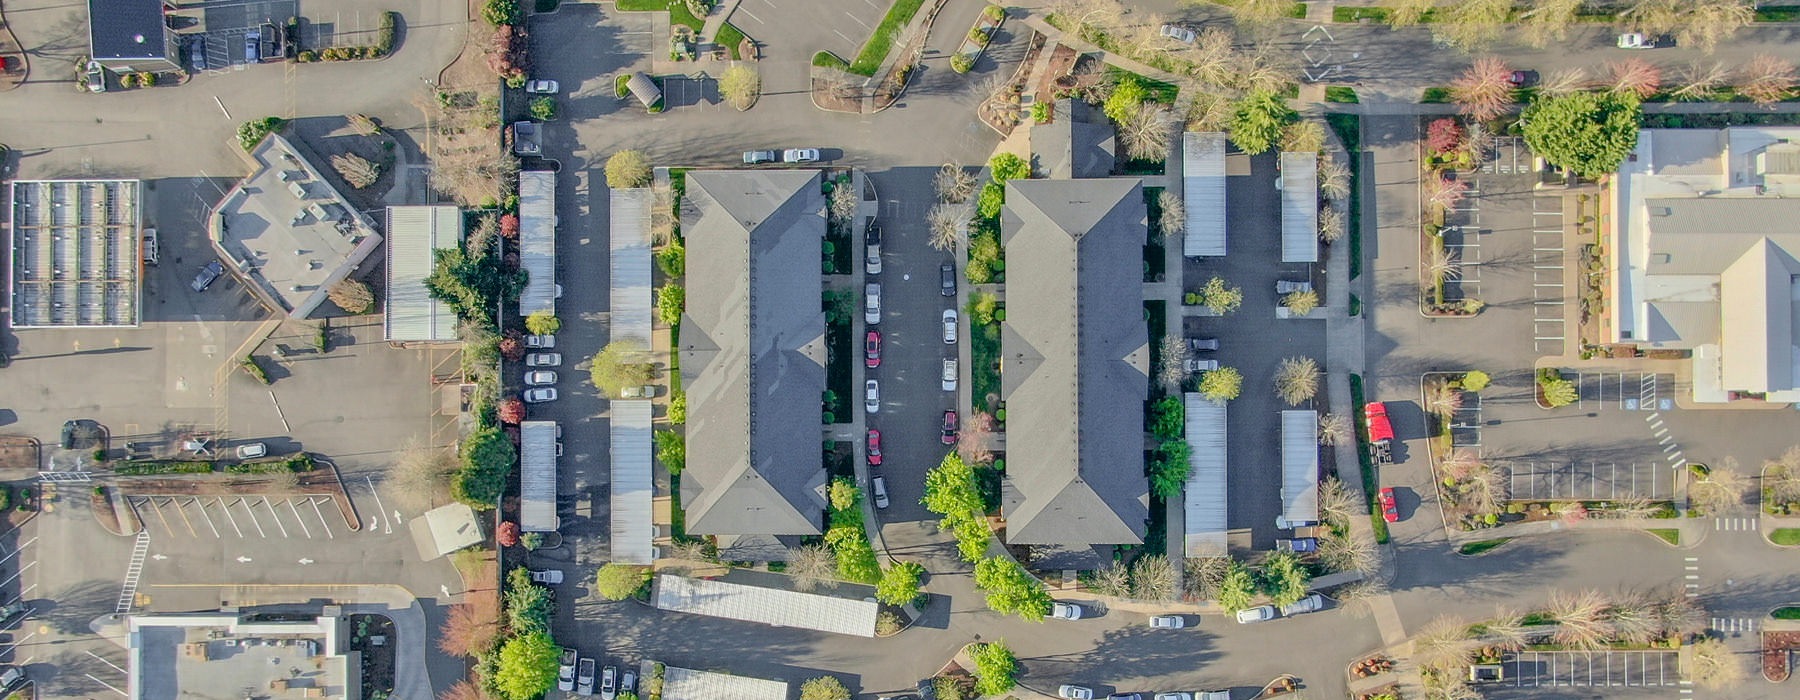 overhead view of Stone Ridge Apartment community